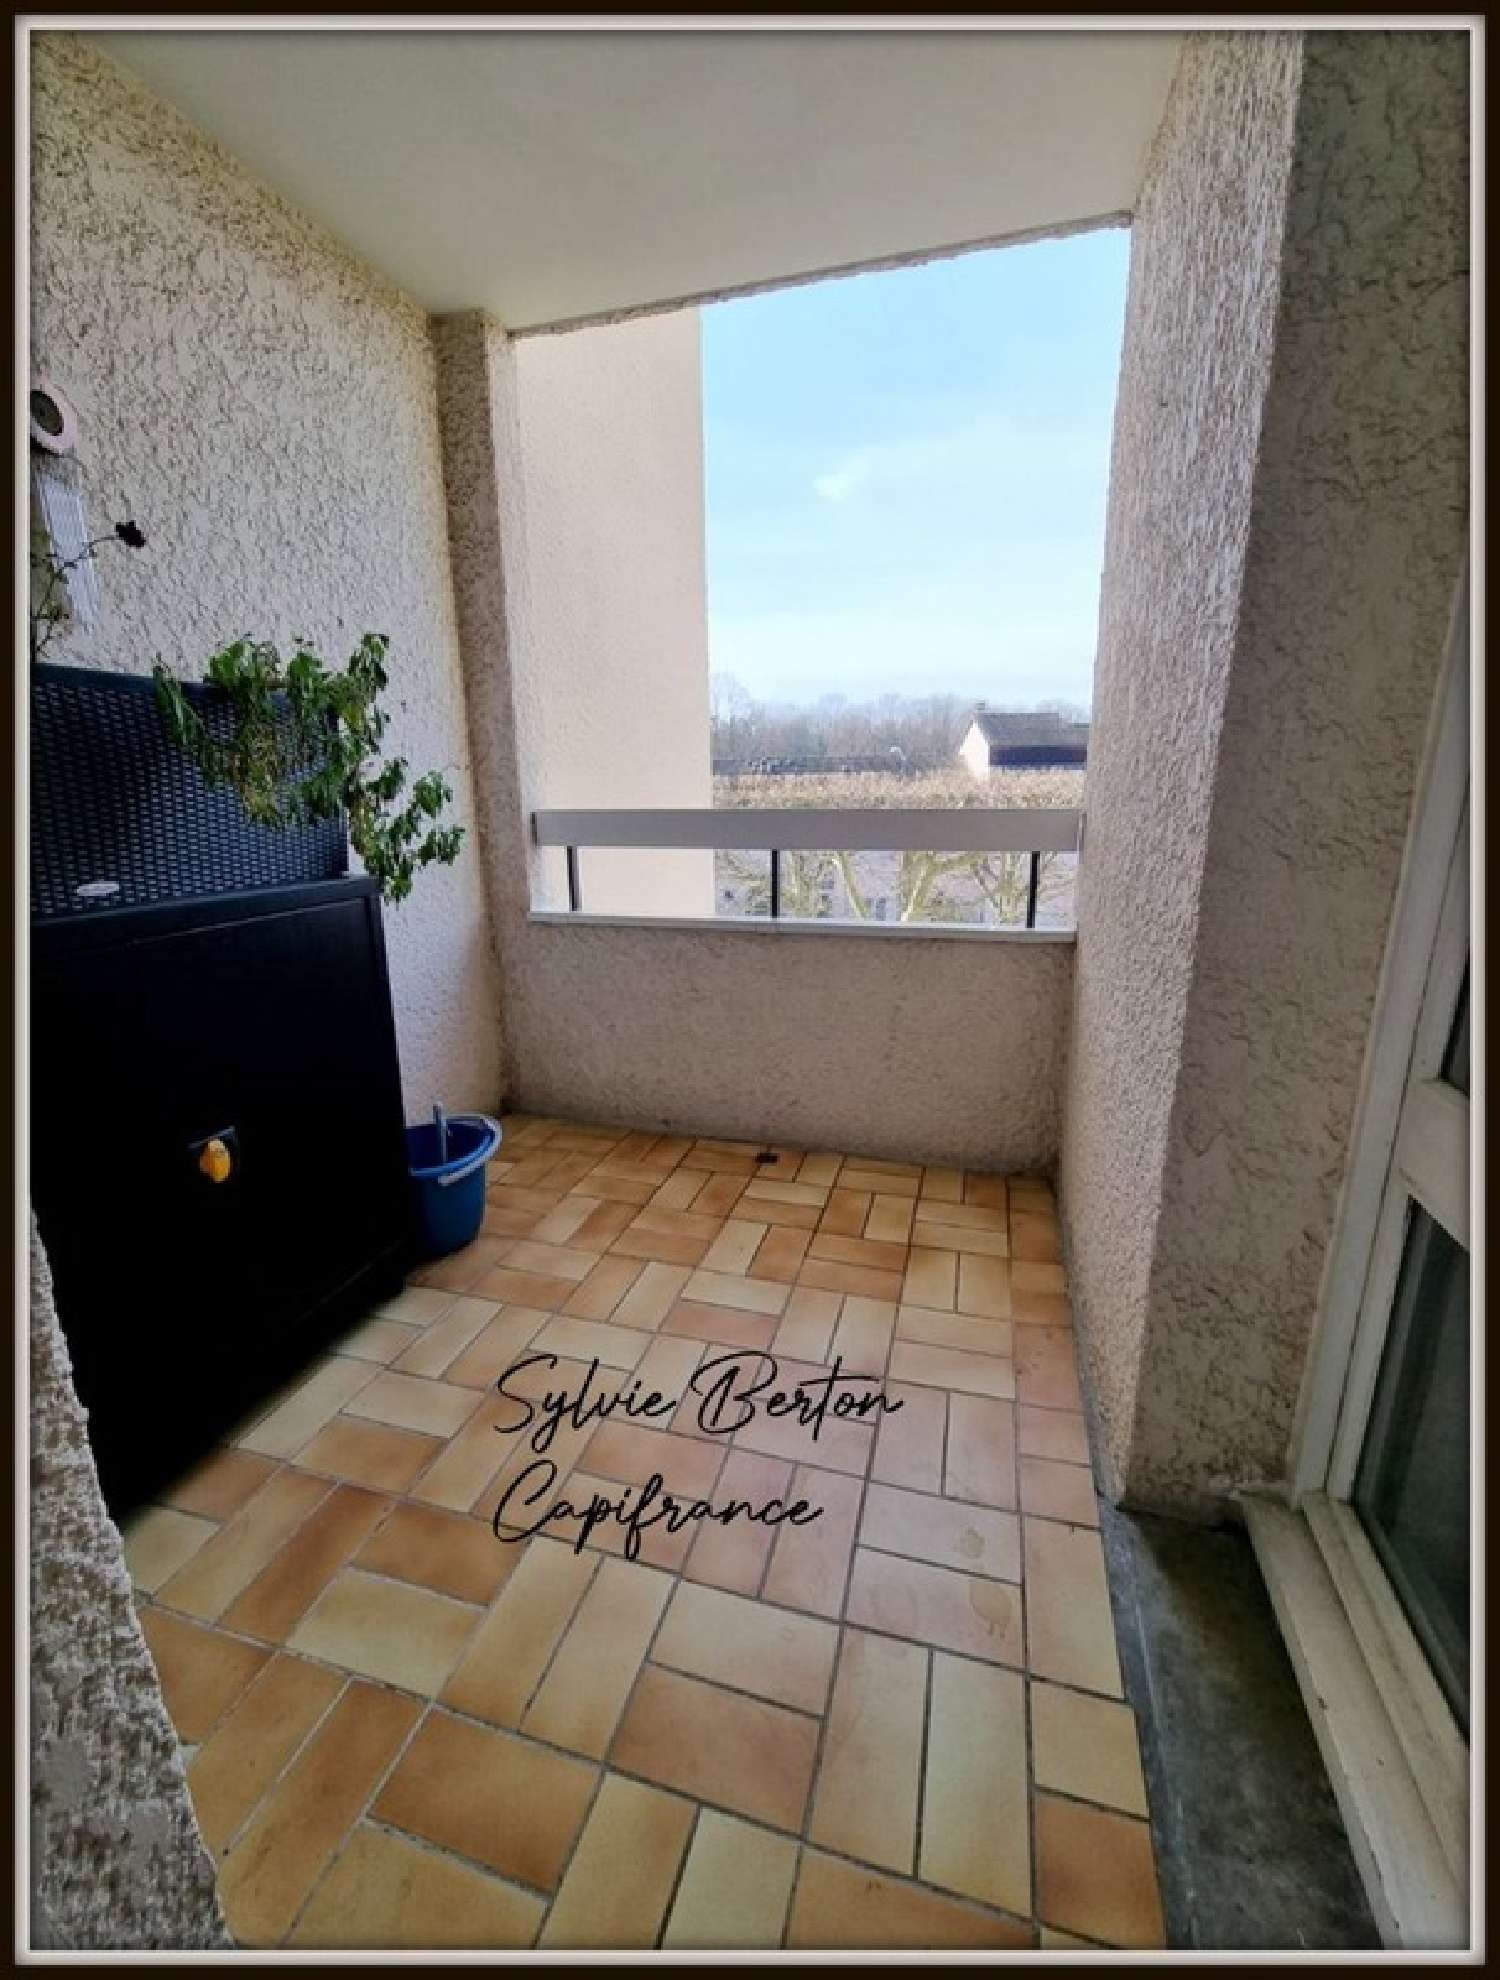  for sale apartment Sevran Seine-Saint-Denis 3